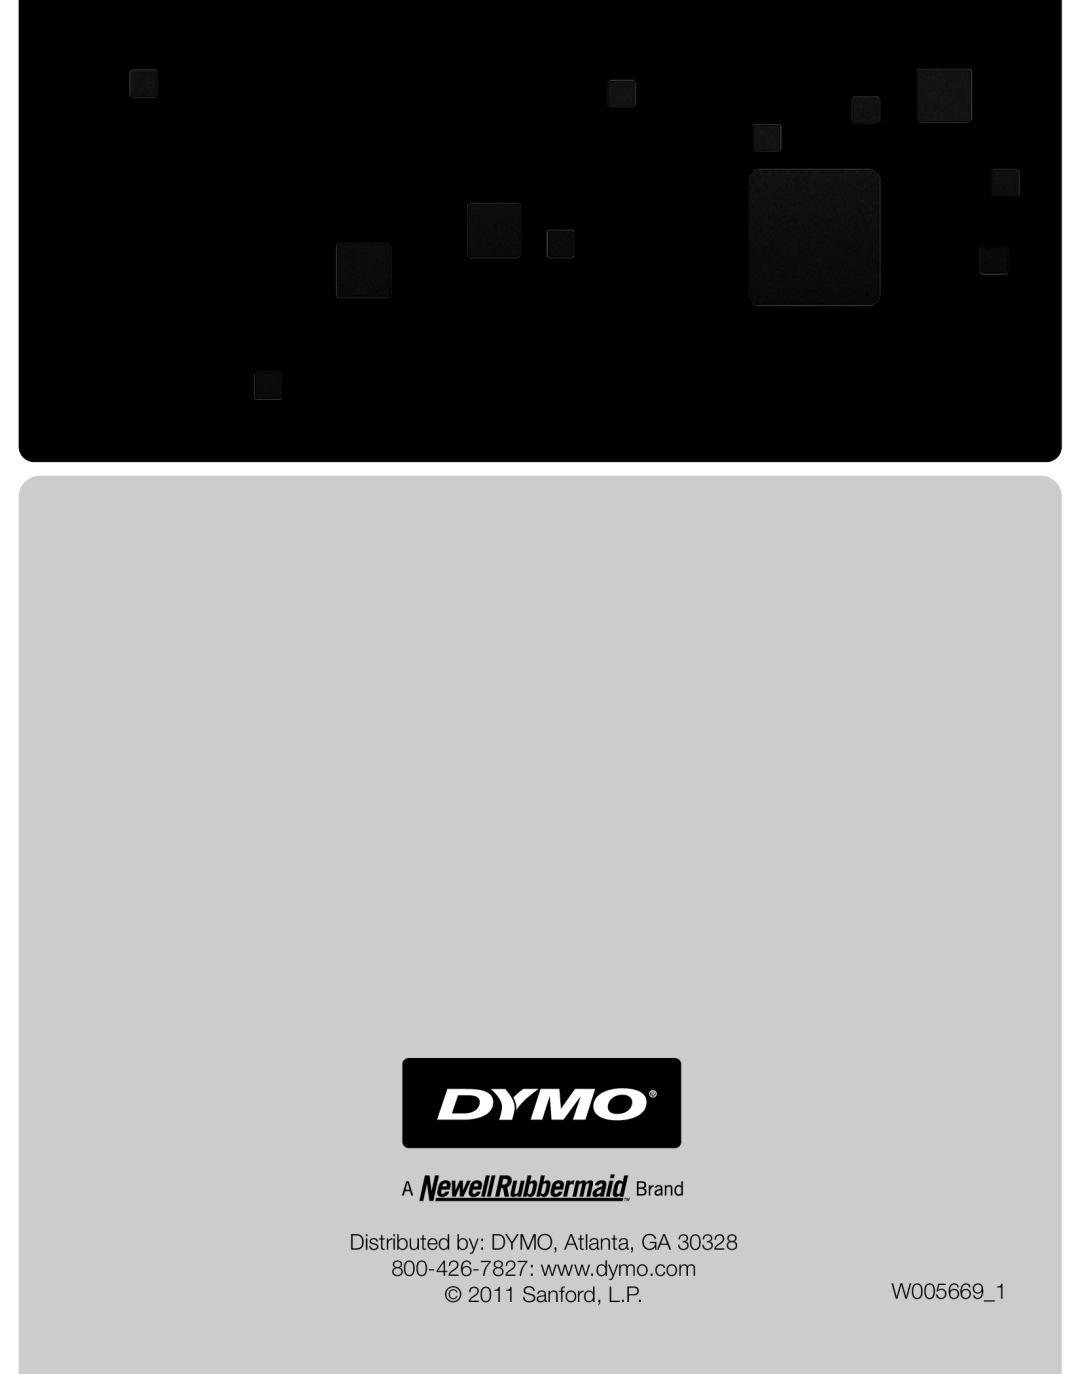 Dymo S400, S250, S100 manual Distributed by DYMO, Atlanta, GA, W0056691, Sanford, L.P 